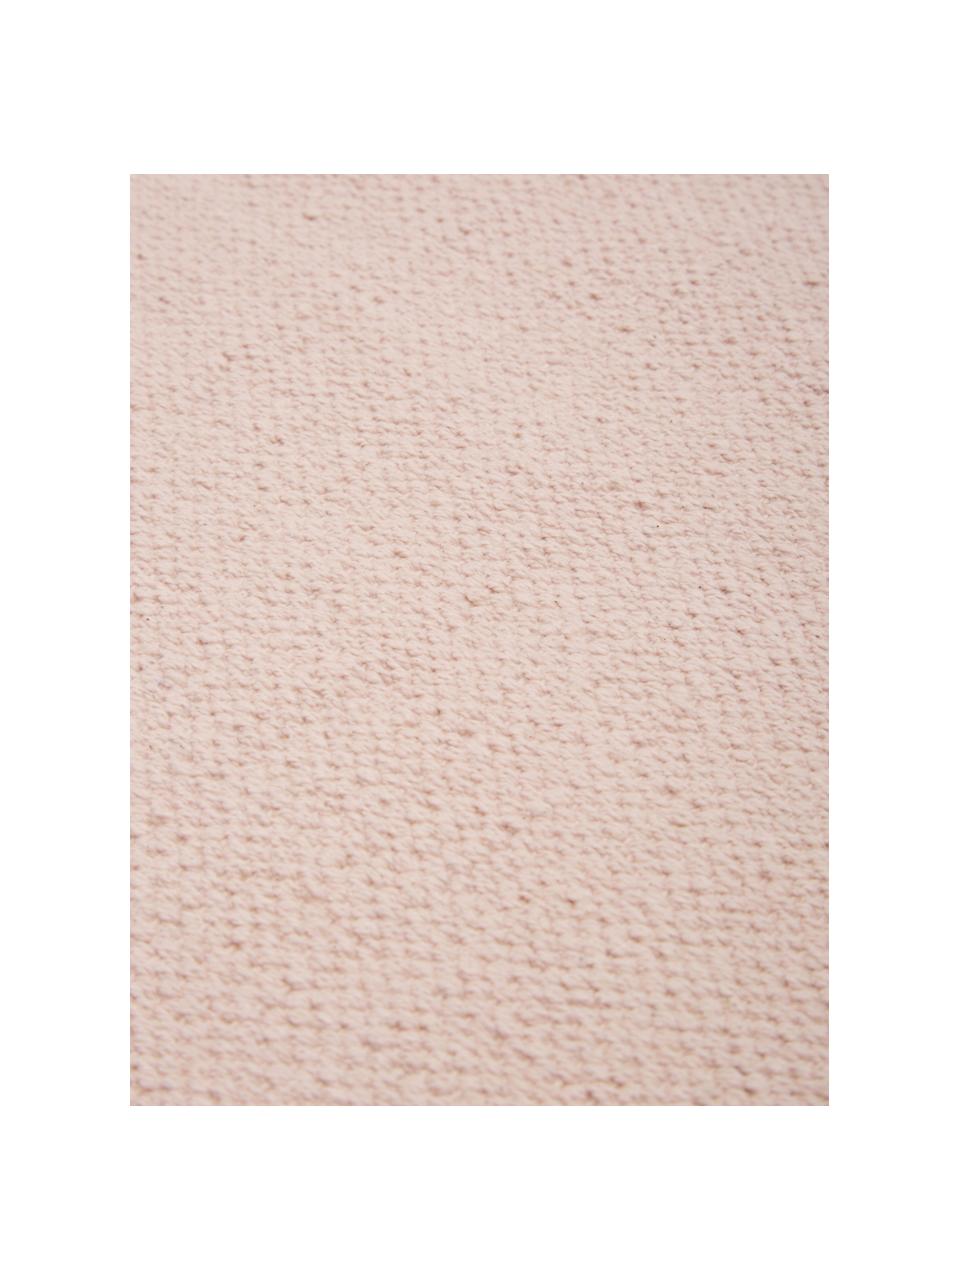 Tapis fin en coton rose, tissé main Agneta, 100 % coton, Rose, larg. 160 x long. 230 cm (taille M)